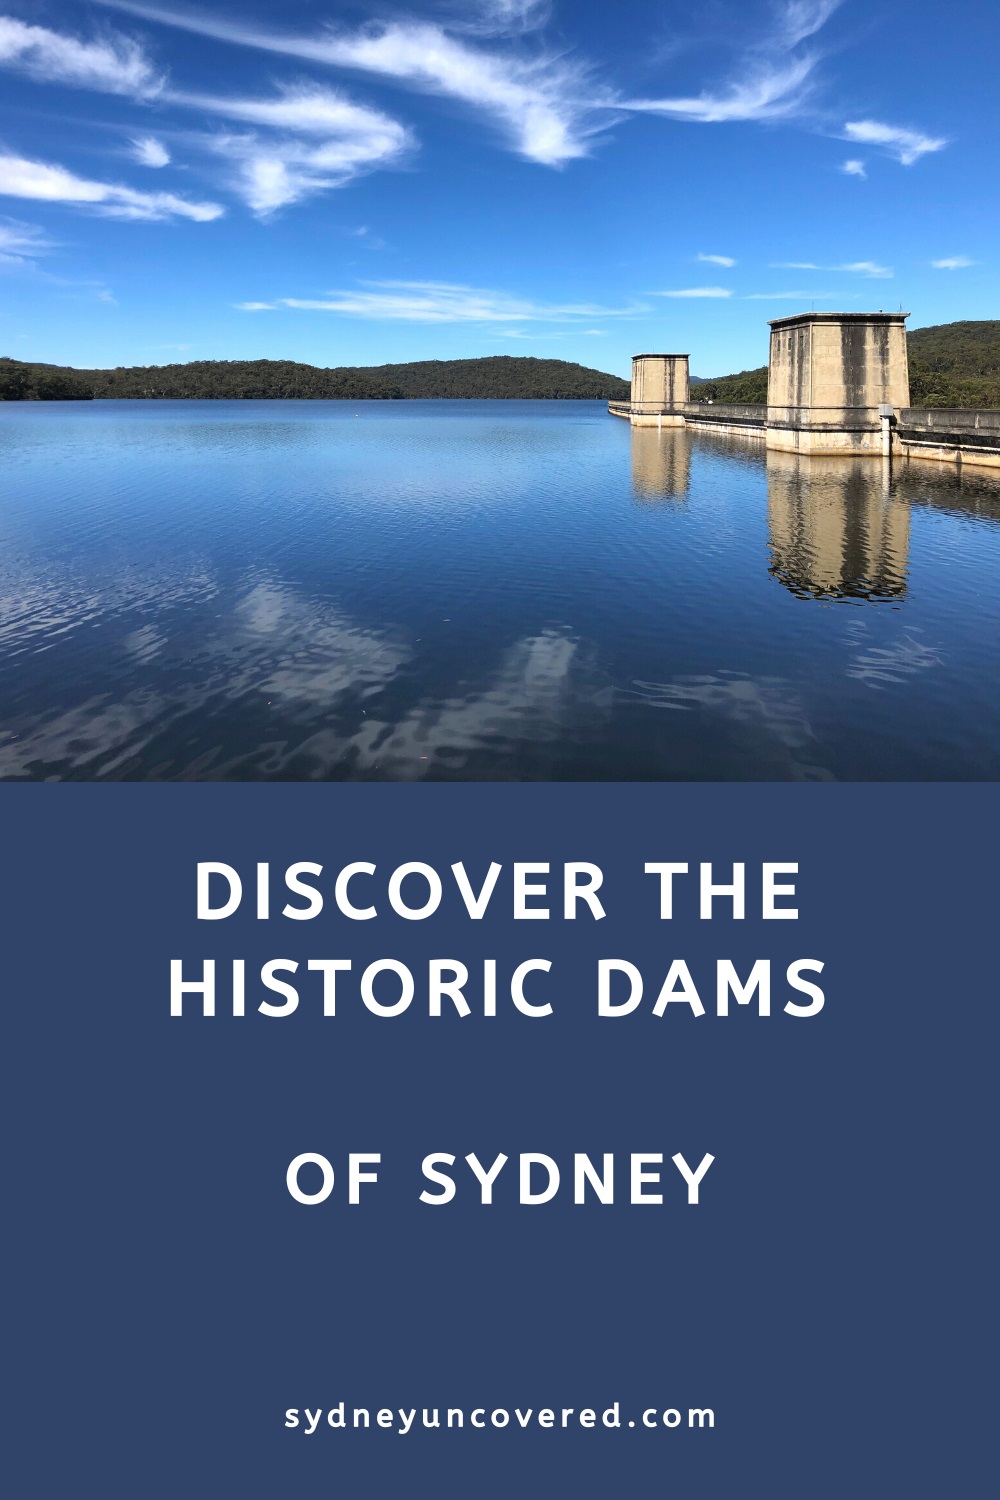 Discover Sydney's historic dams